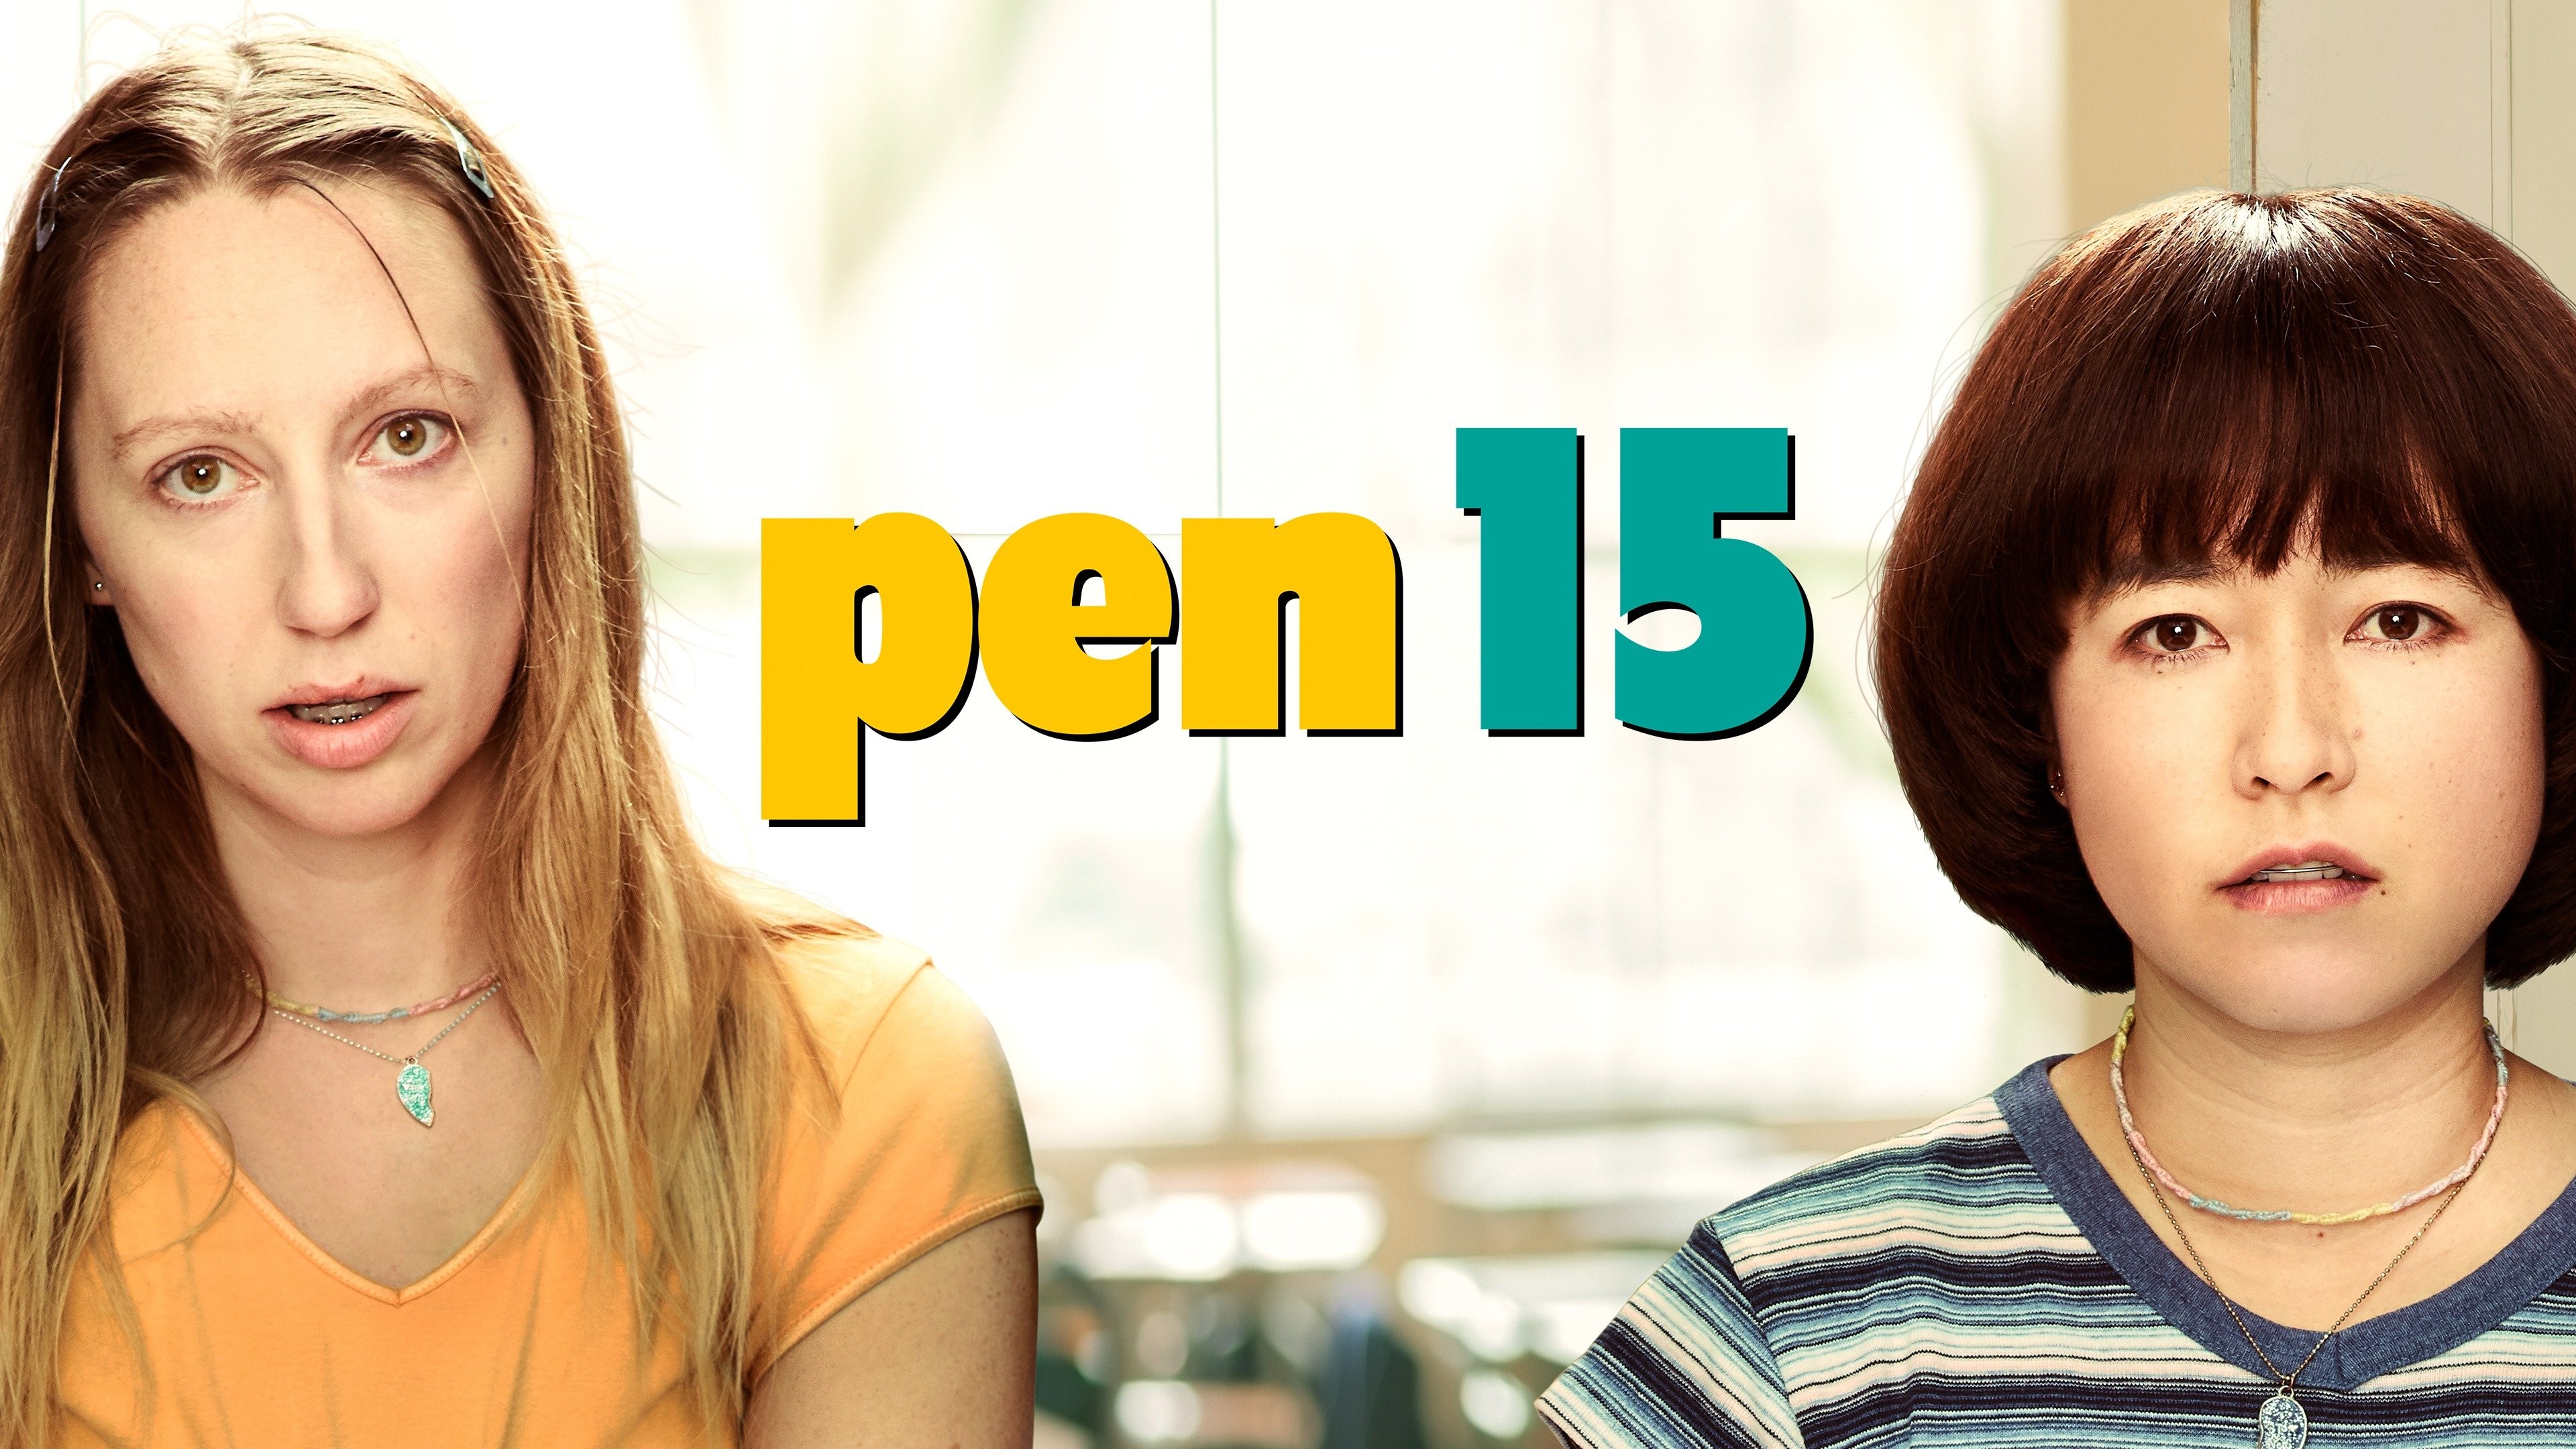 Watch Pen15 season 1 episode 7 streaming online | BetaSeries.com